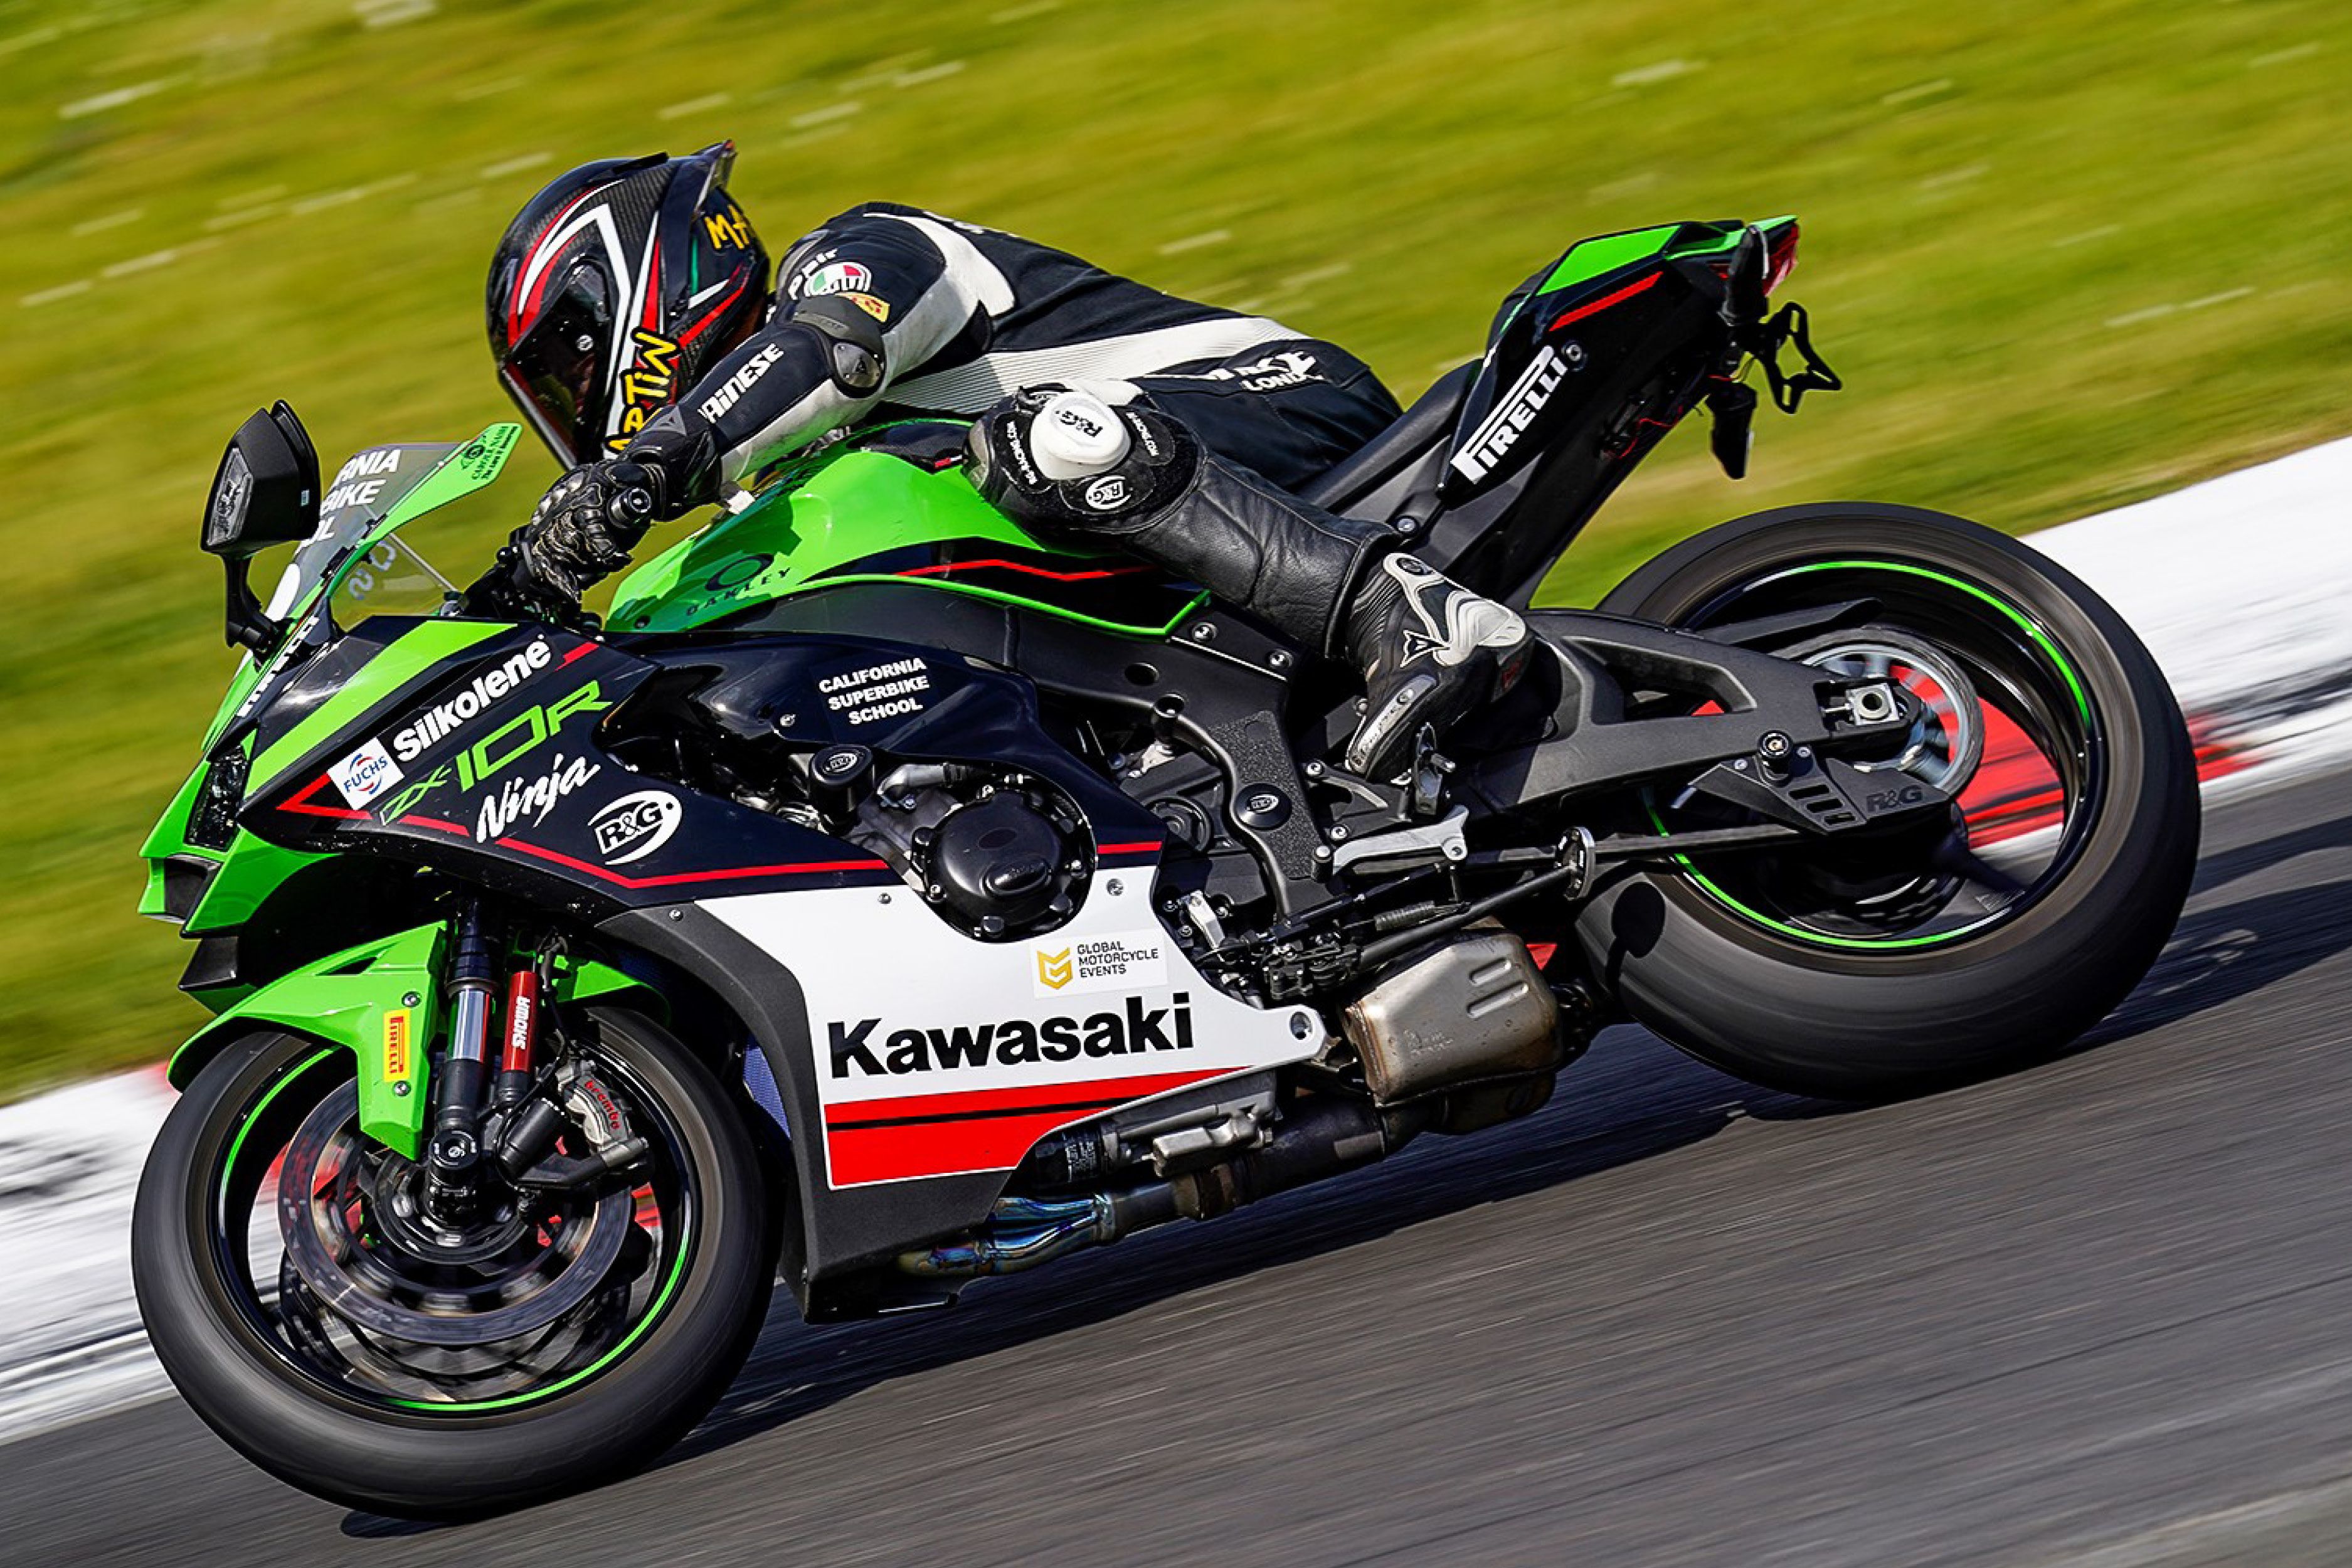 R&G Sponsored Kawasaki Ninja on track